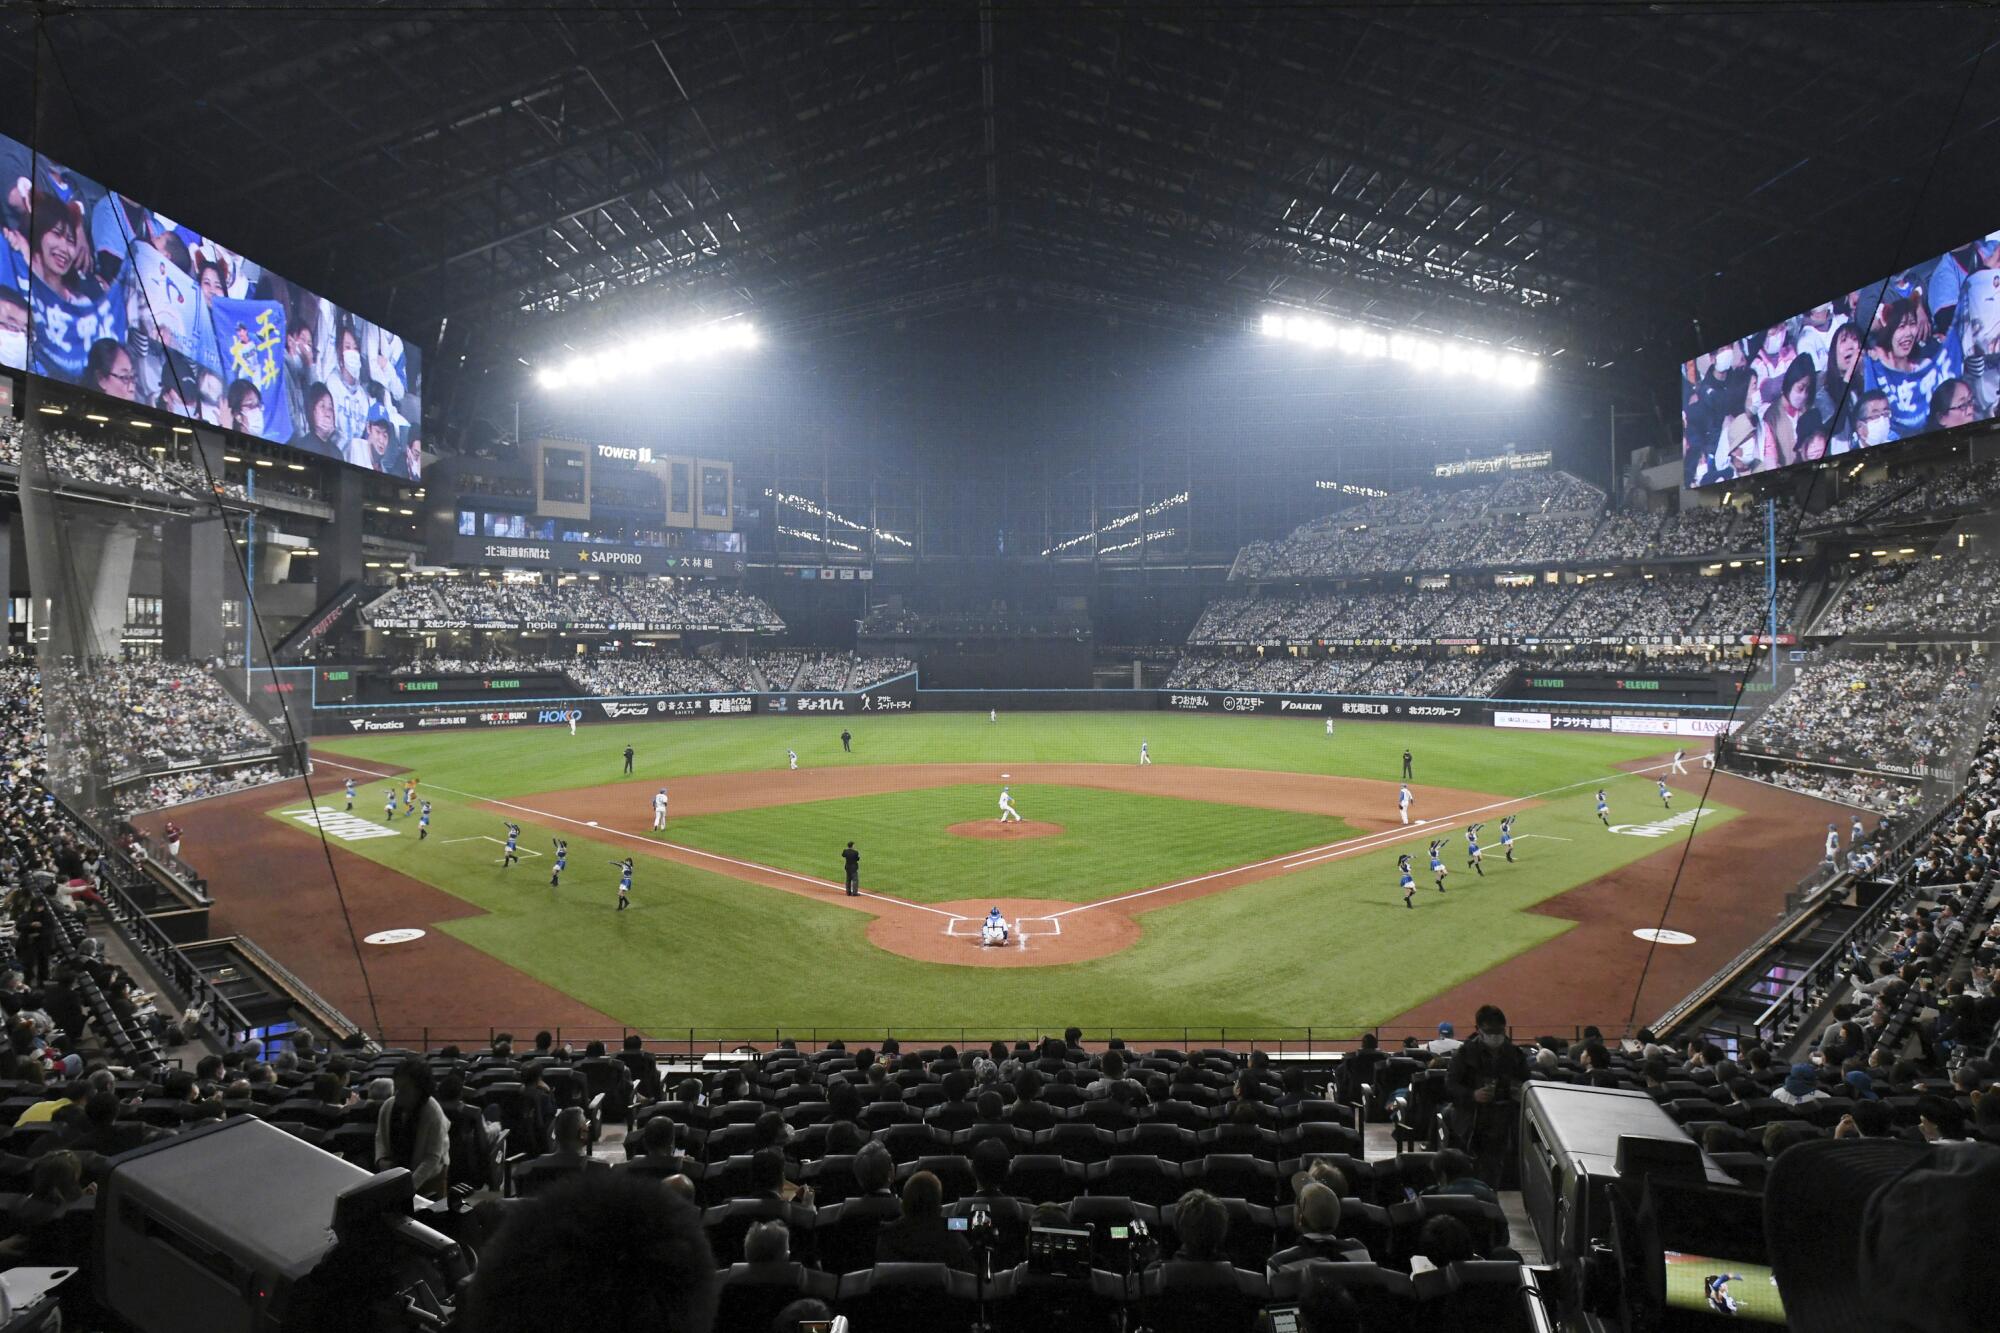 Es Con Field Hokkaido is a ballpark the Nippon-Ham Fighters opened last year in Kitahiroshima, Japan.